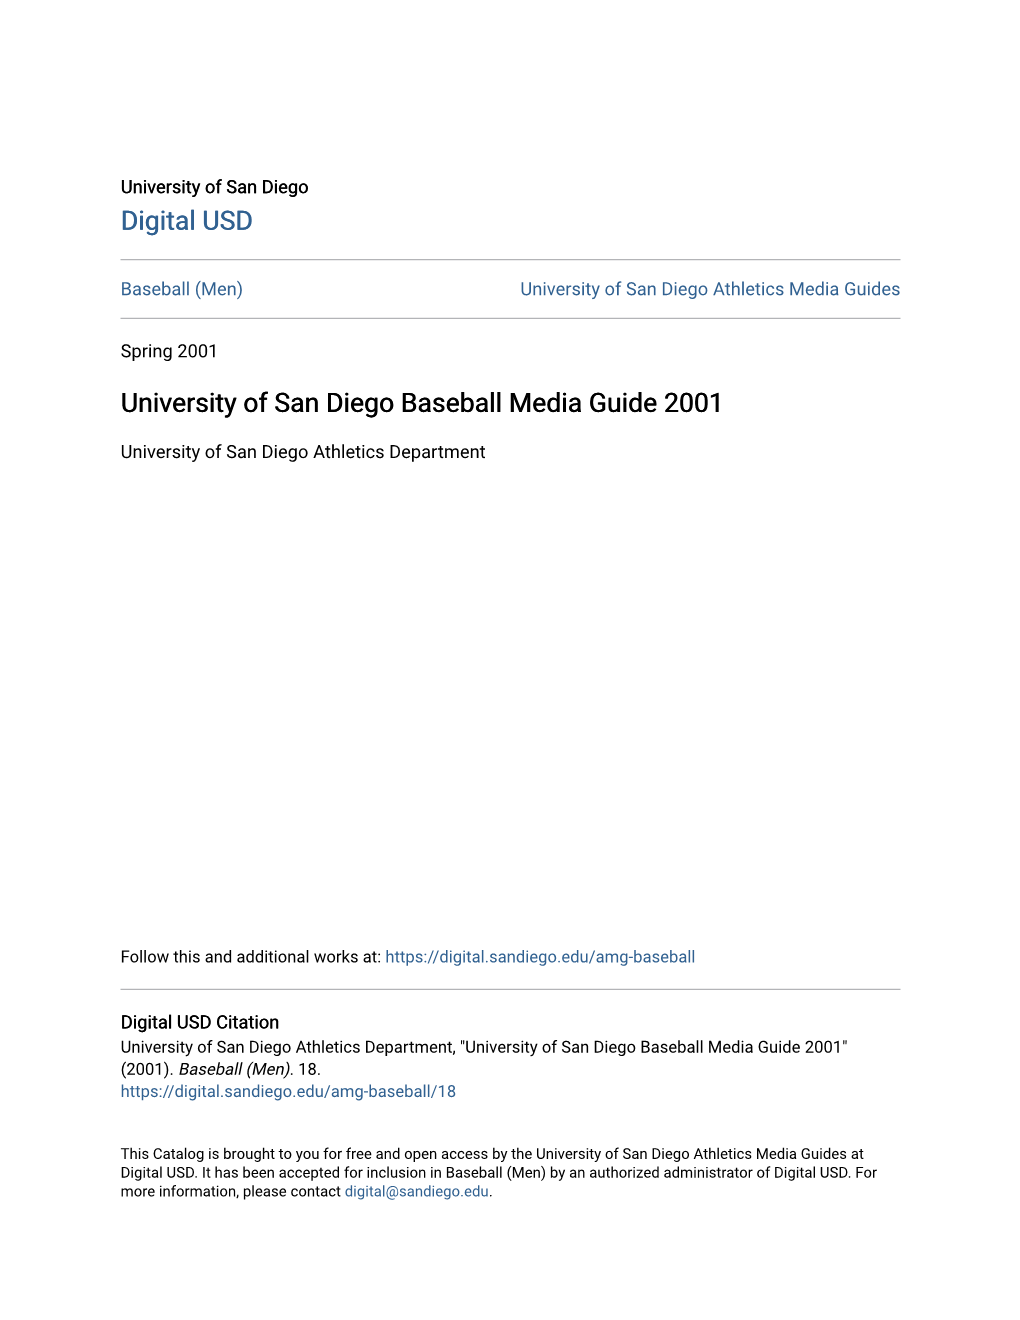 University of San Diego Baseball Media Guide 2001